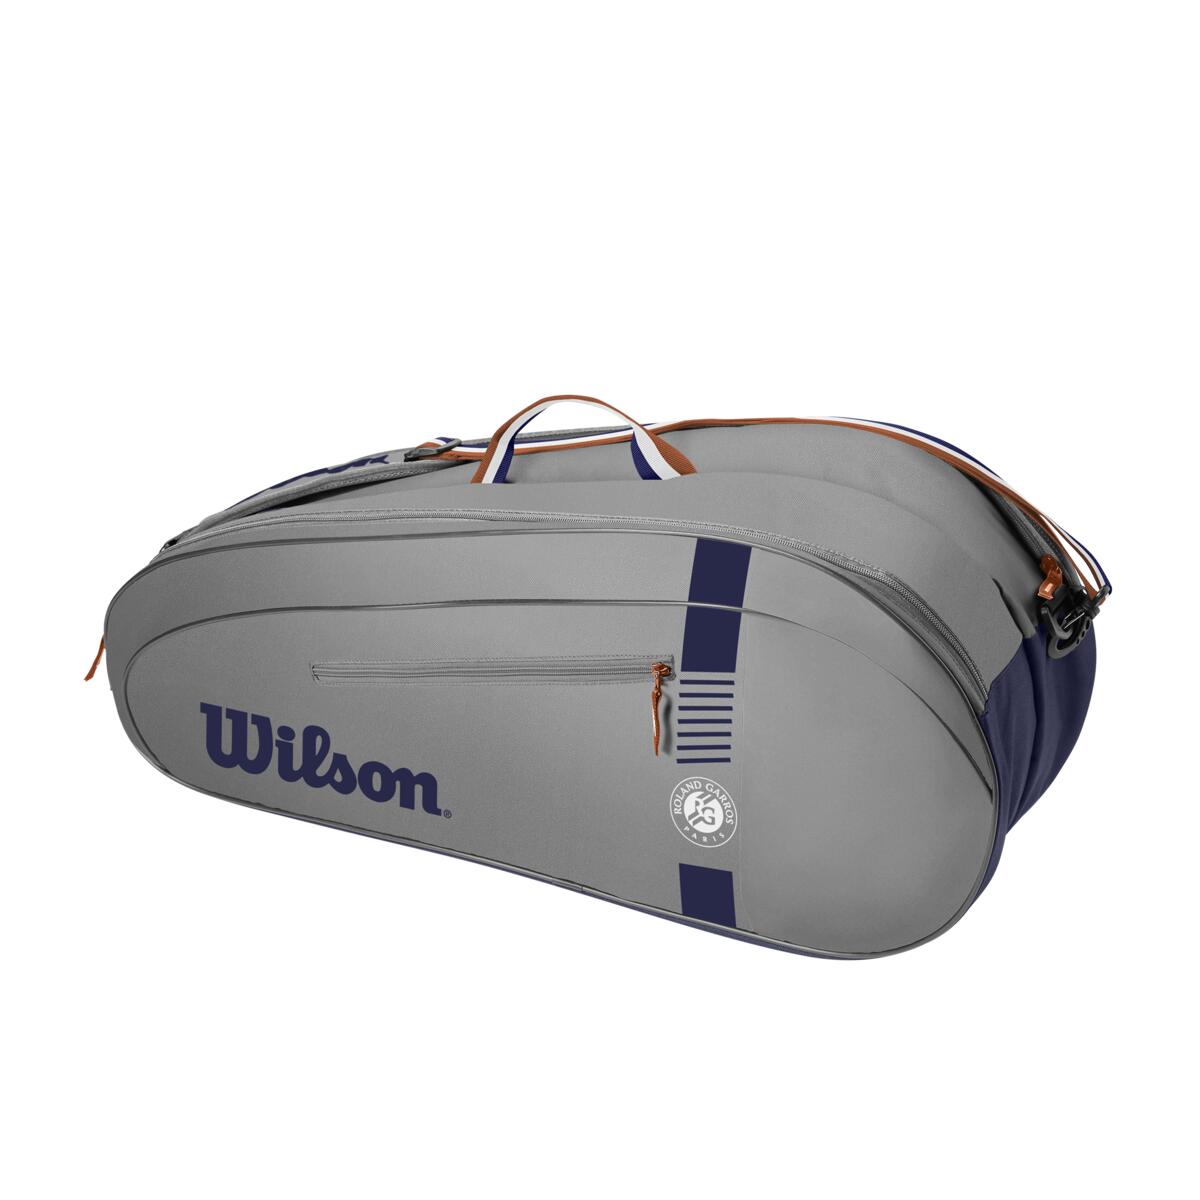 Wilson Pro Staff Z6702 Badminton Tennis Bag